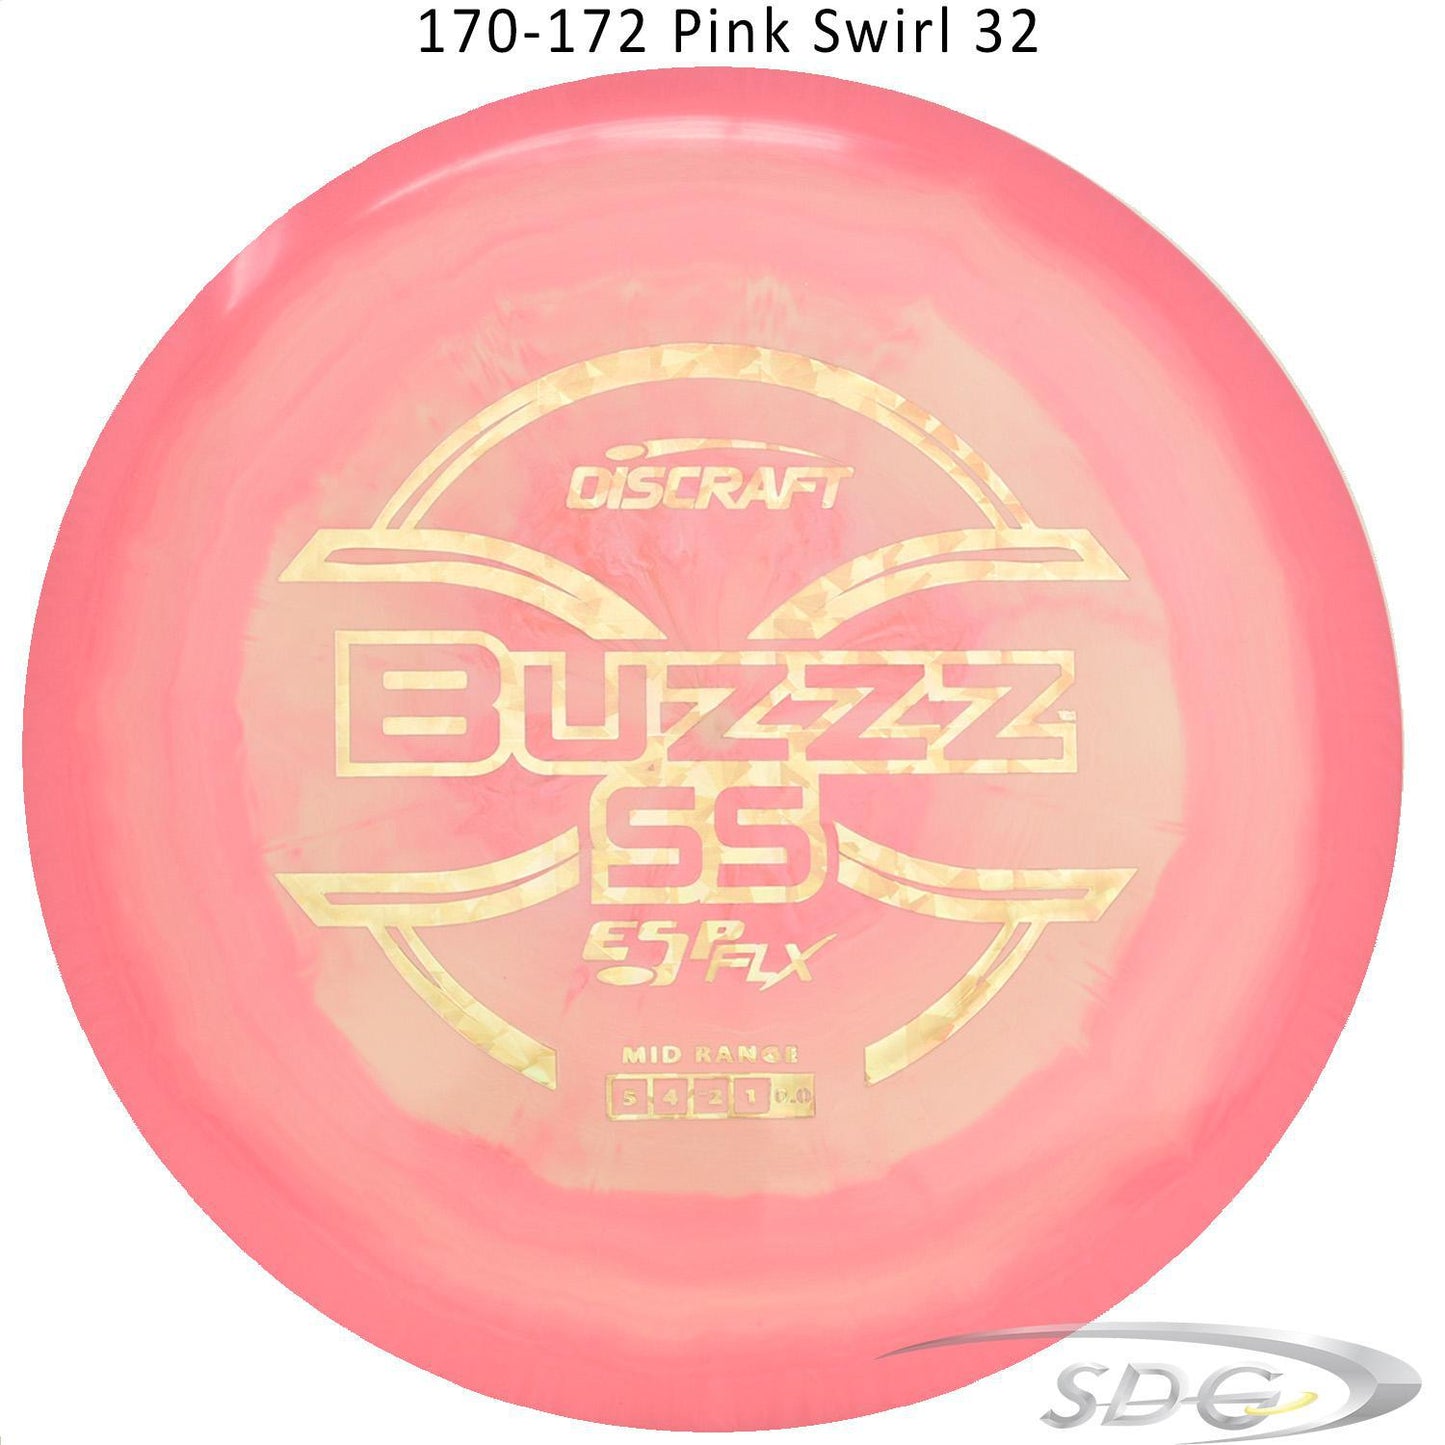 discraft-esp-flx-buzzz-ss-disc-golf-mid-range 170-172 Pink Swirl 32